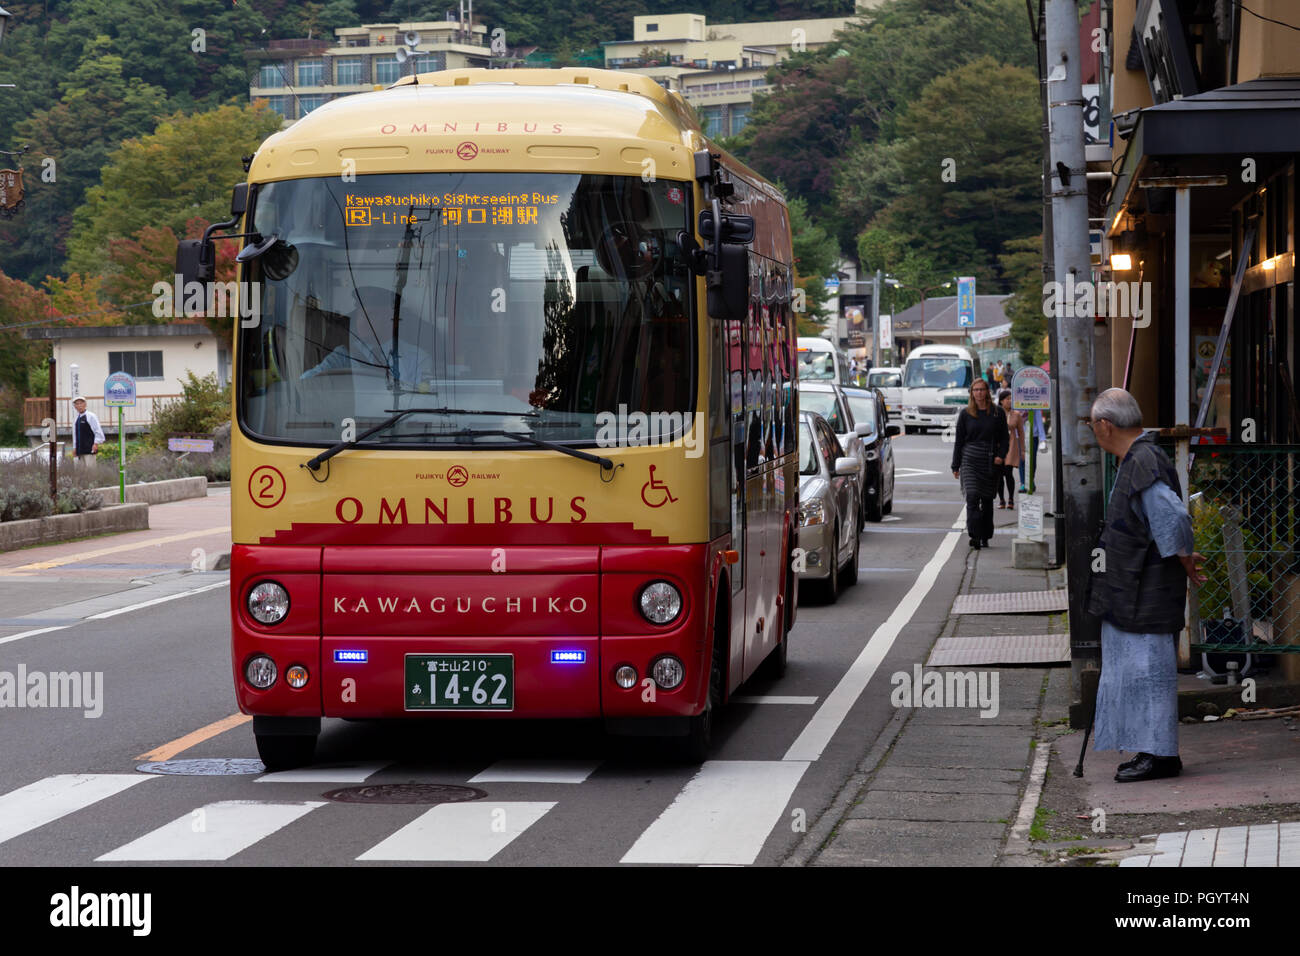 Kawaguchiko, Japan - September 8, 2019 : japanese old man and Kawaguchiko omnibus traveling bus are stopping at pedestrian crossing road. Stock Photo